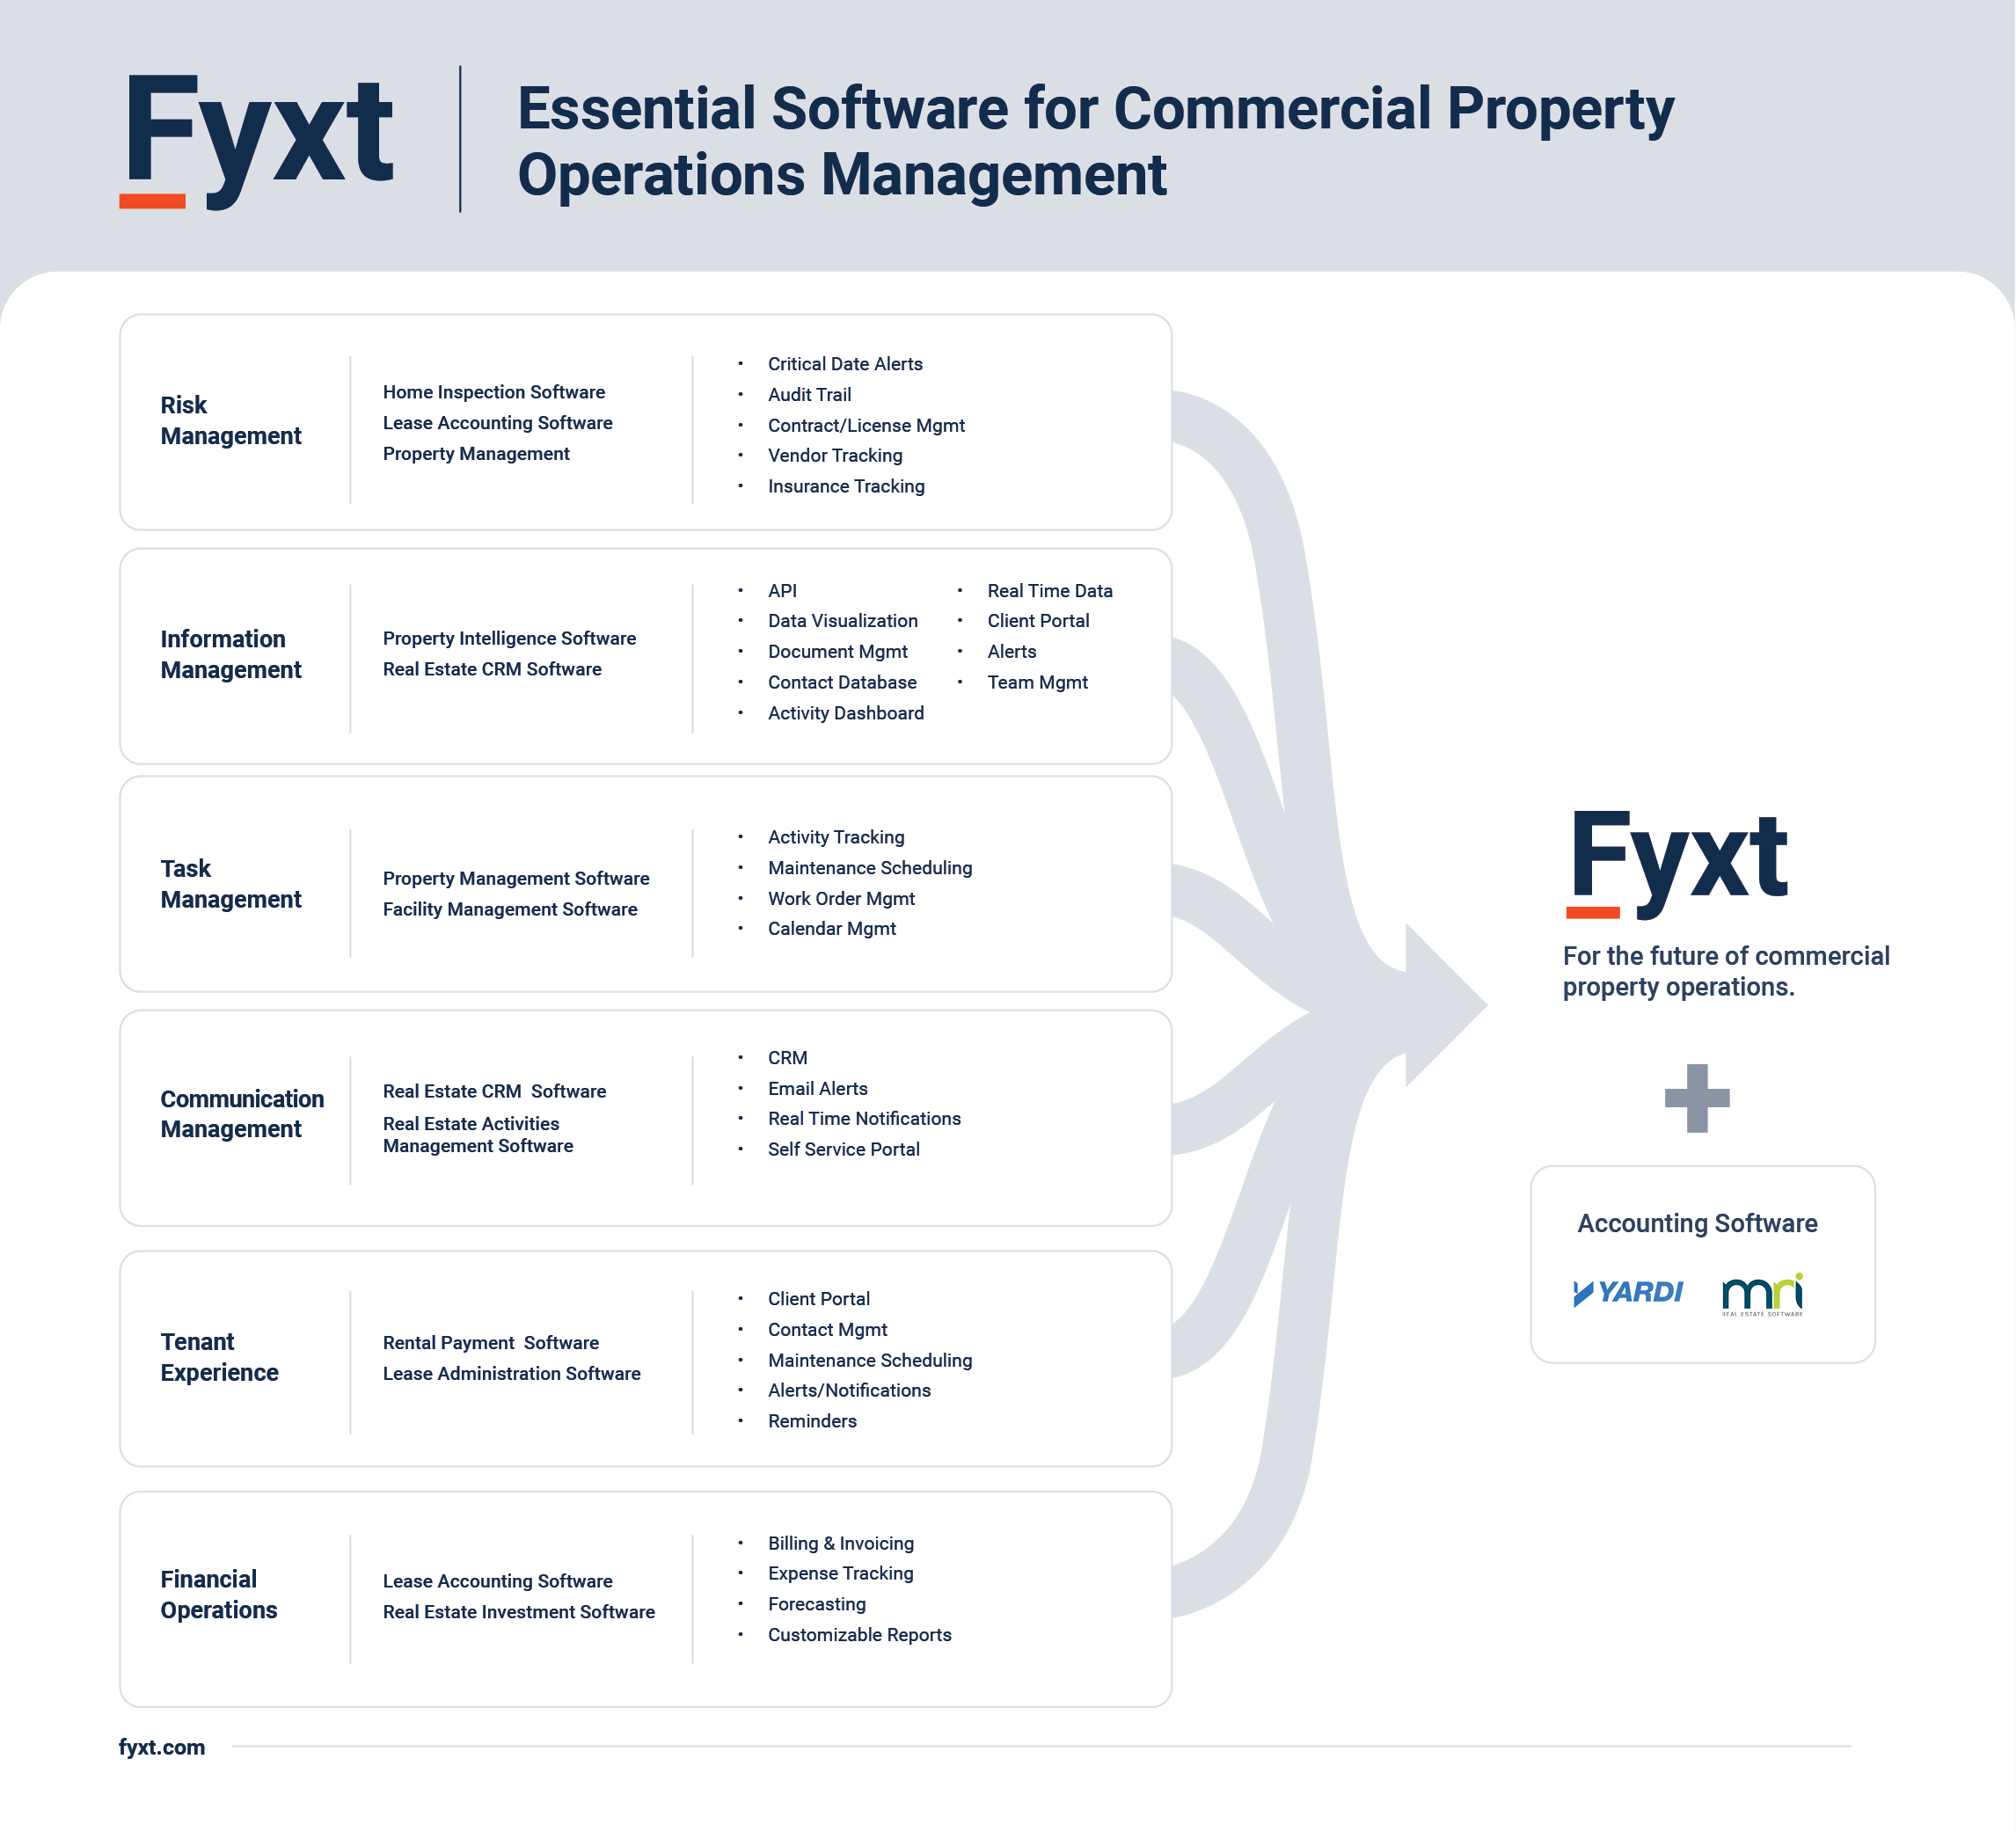 fyxt essential software management